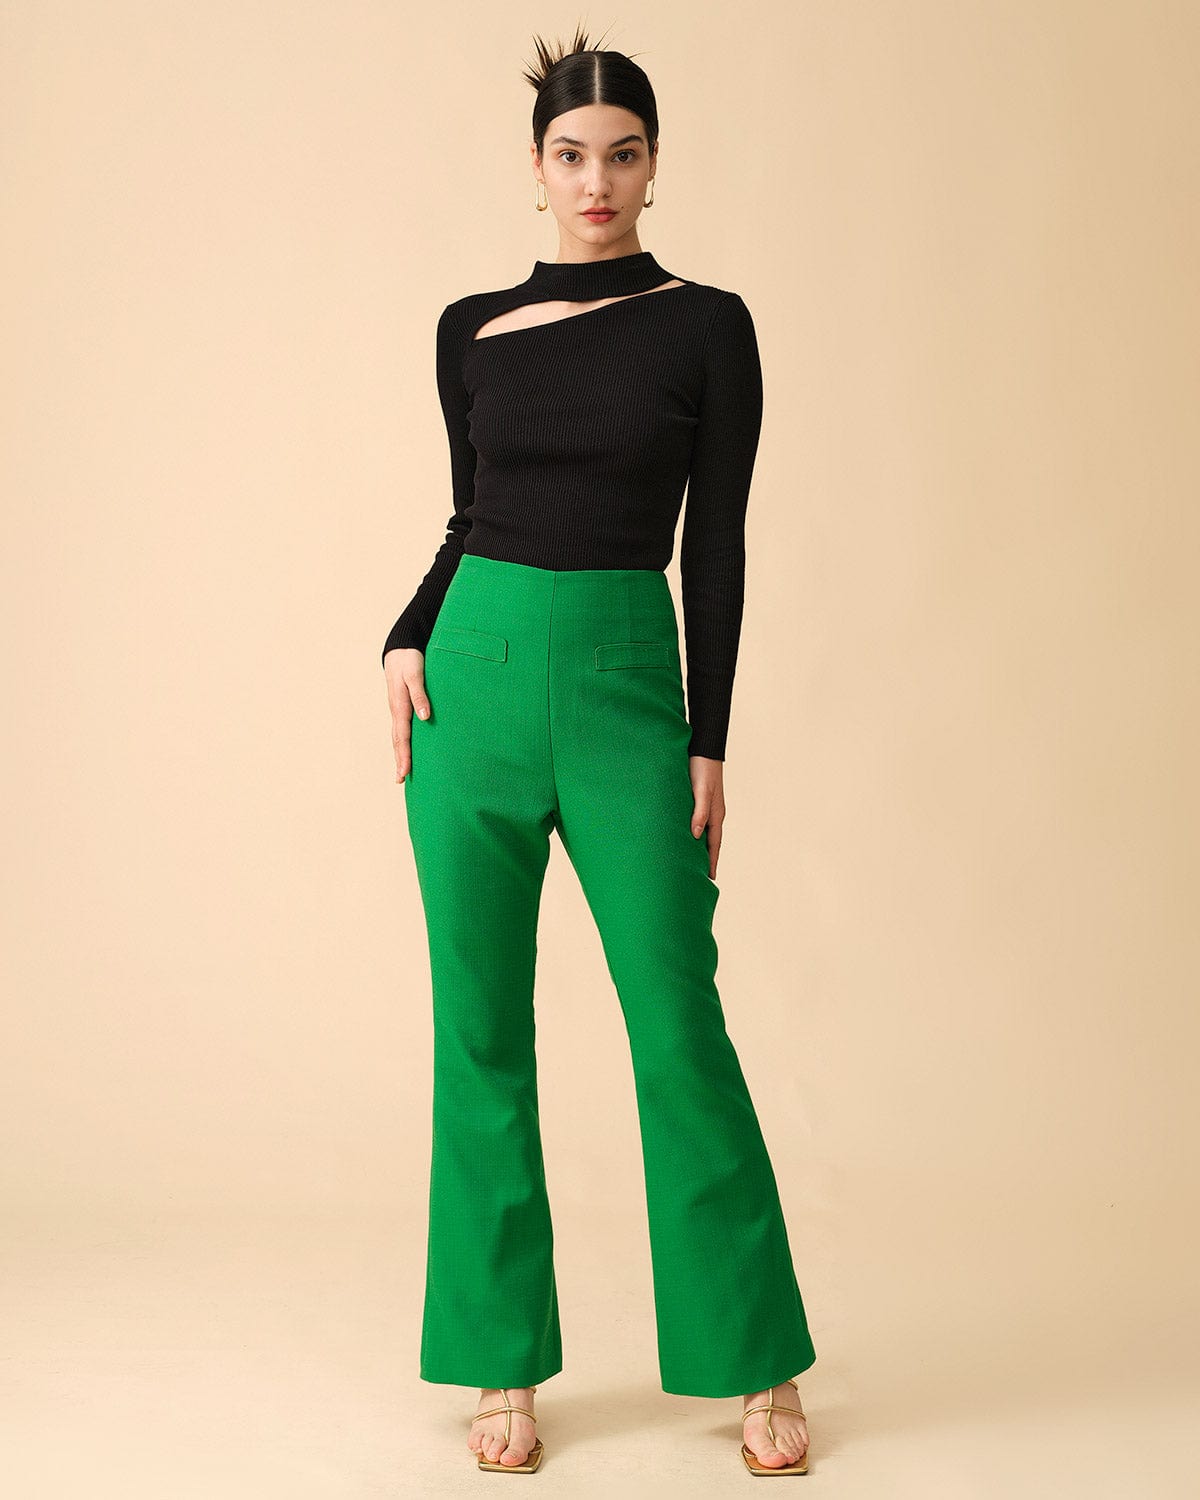 Women's Solid Color High Waist Slim Micro Flare Pants Corduroy Casual Pants